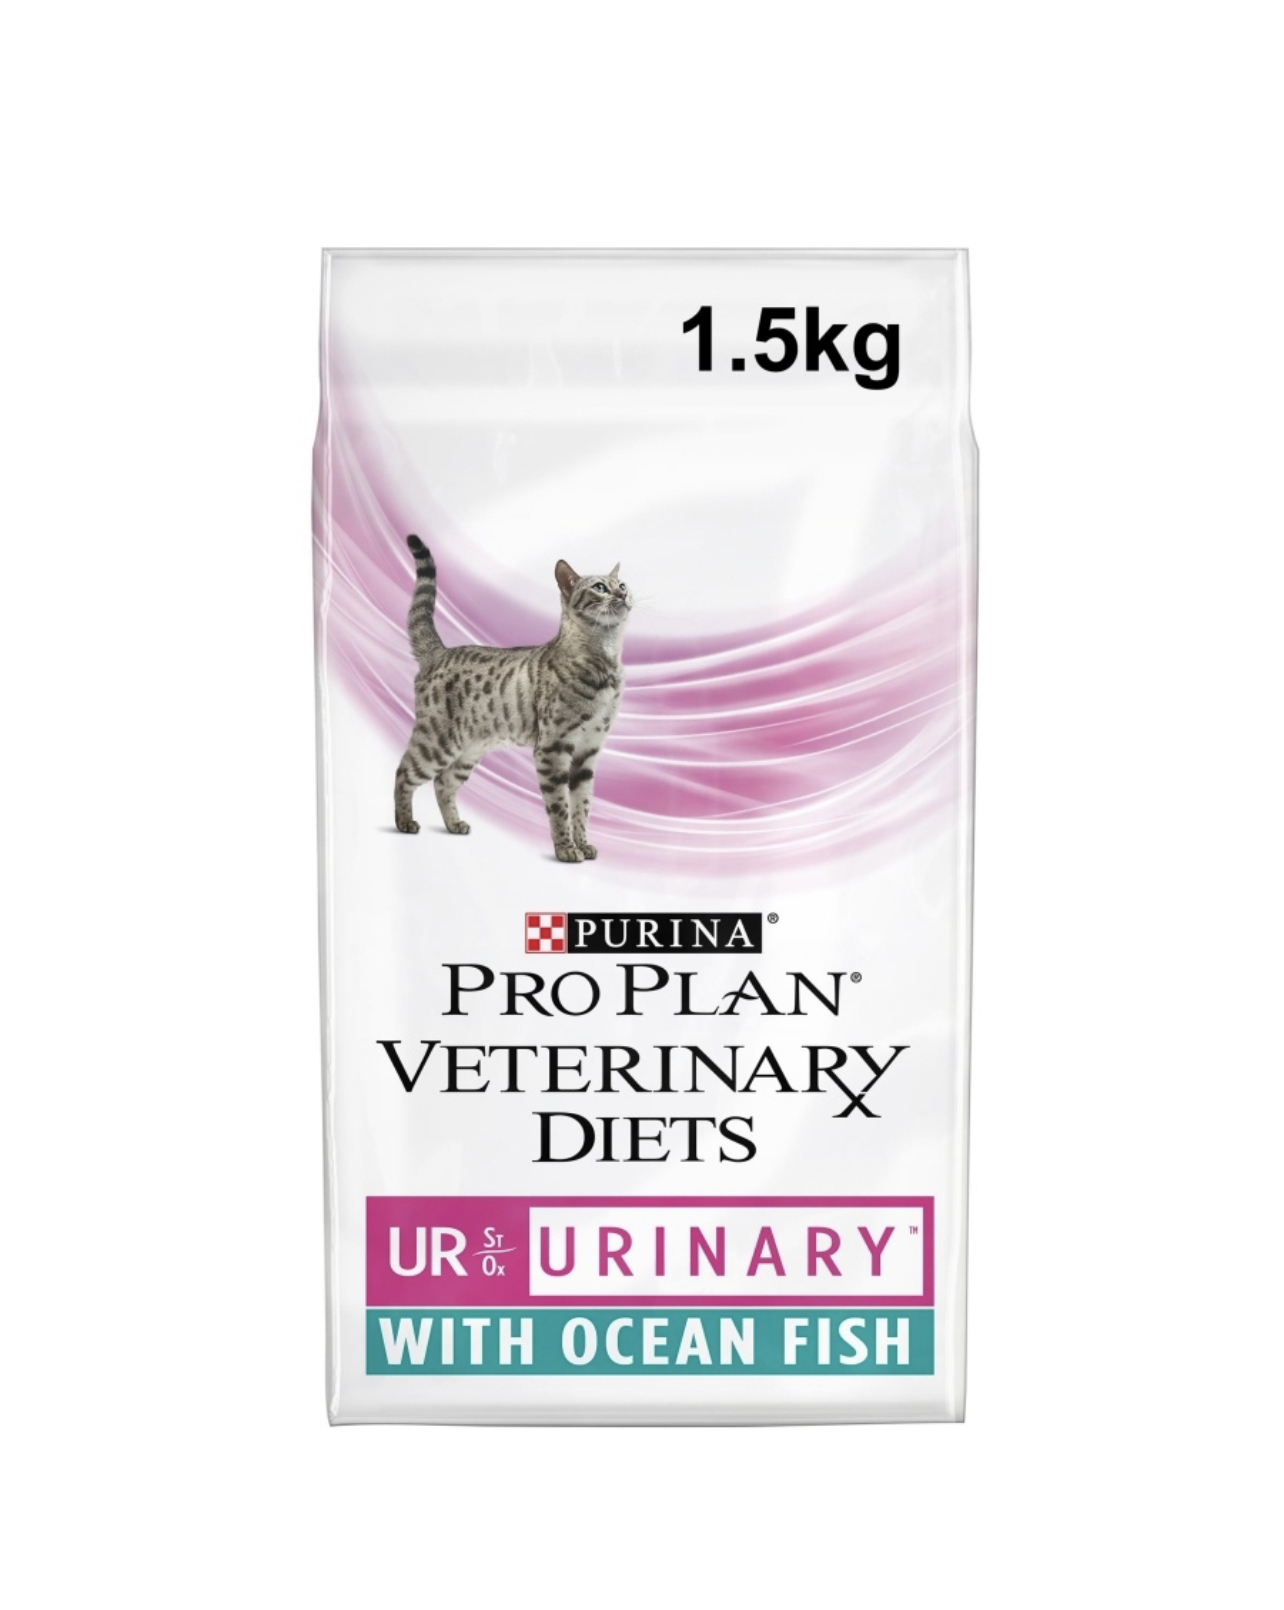 Pro plan veterinary urinary для кошек. Pro Plan Veterinary Diets корм сухой Urinary для кошек 1.5 кг. Purina renal для кошек. Уринари Пурина Проплан 1.5 кг. Pro Plan renal function для кошек 1.5 кг.